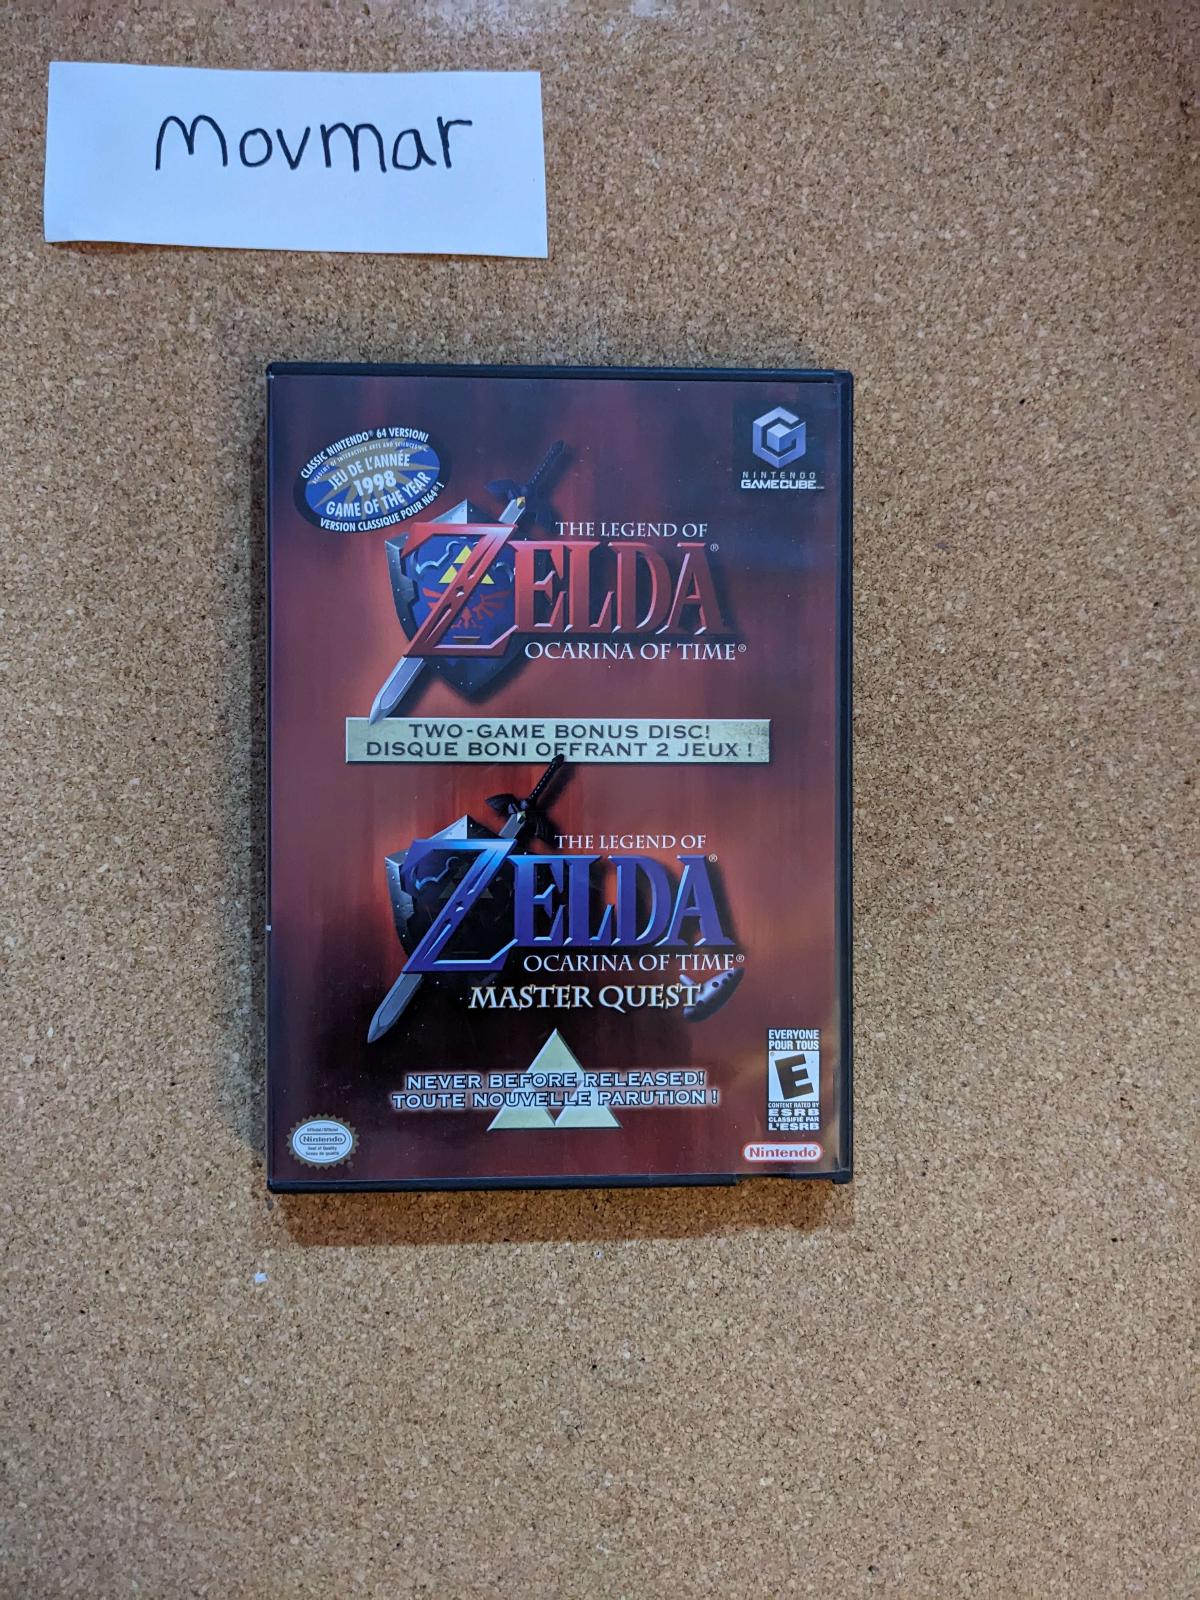 Zelda Ocarina of Time Master Quest, Item, Box, and Manual